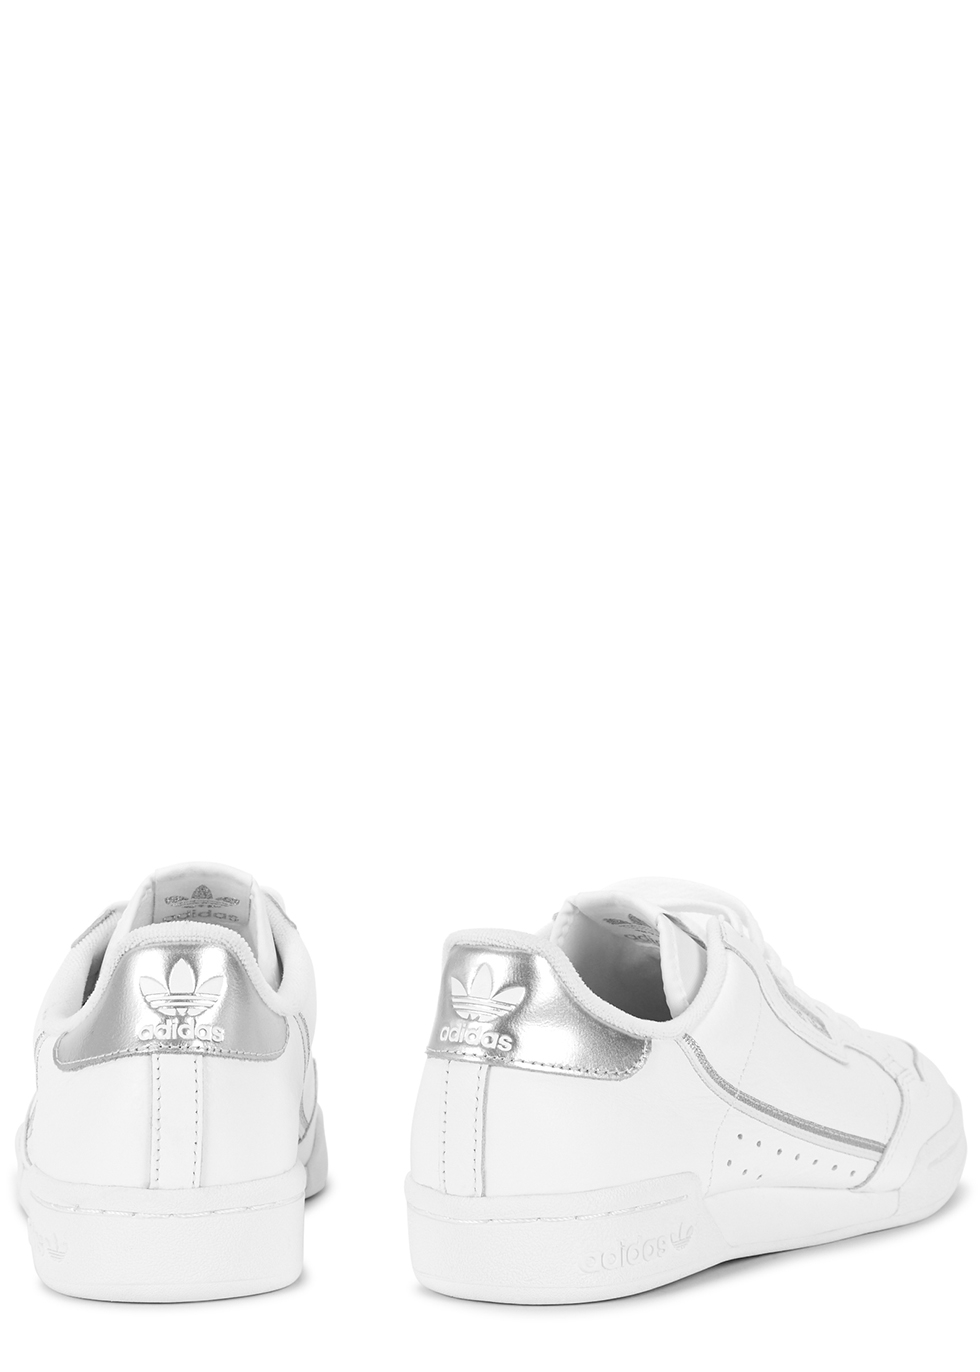 adidas originals men's continental 80 white sneaker